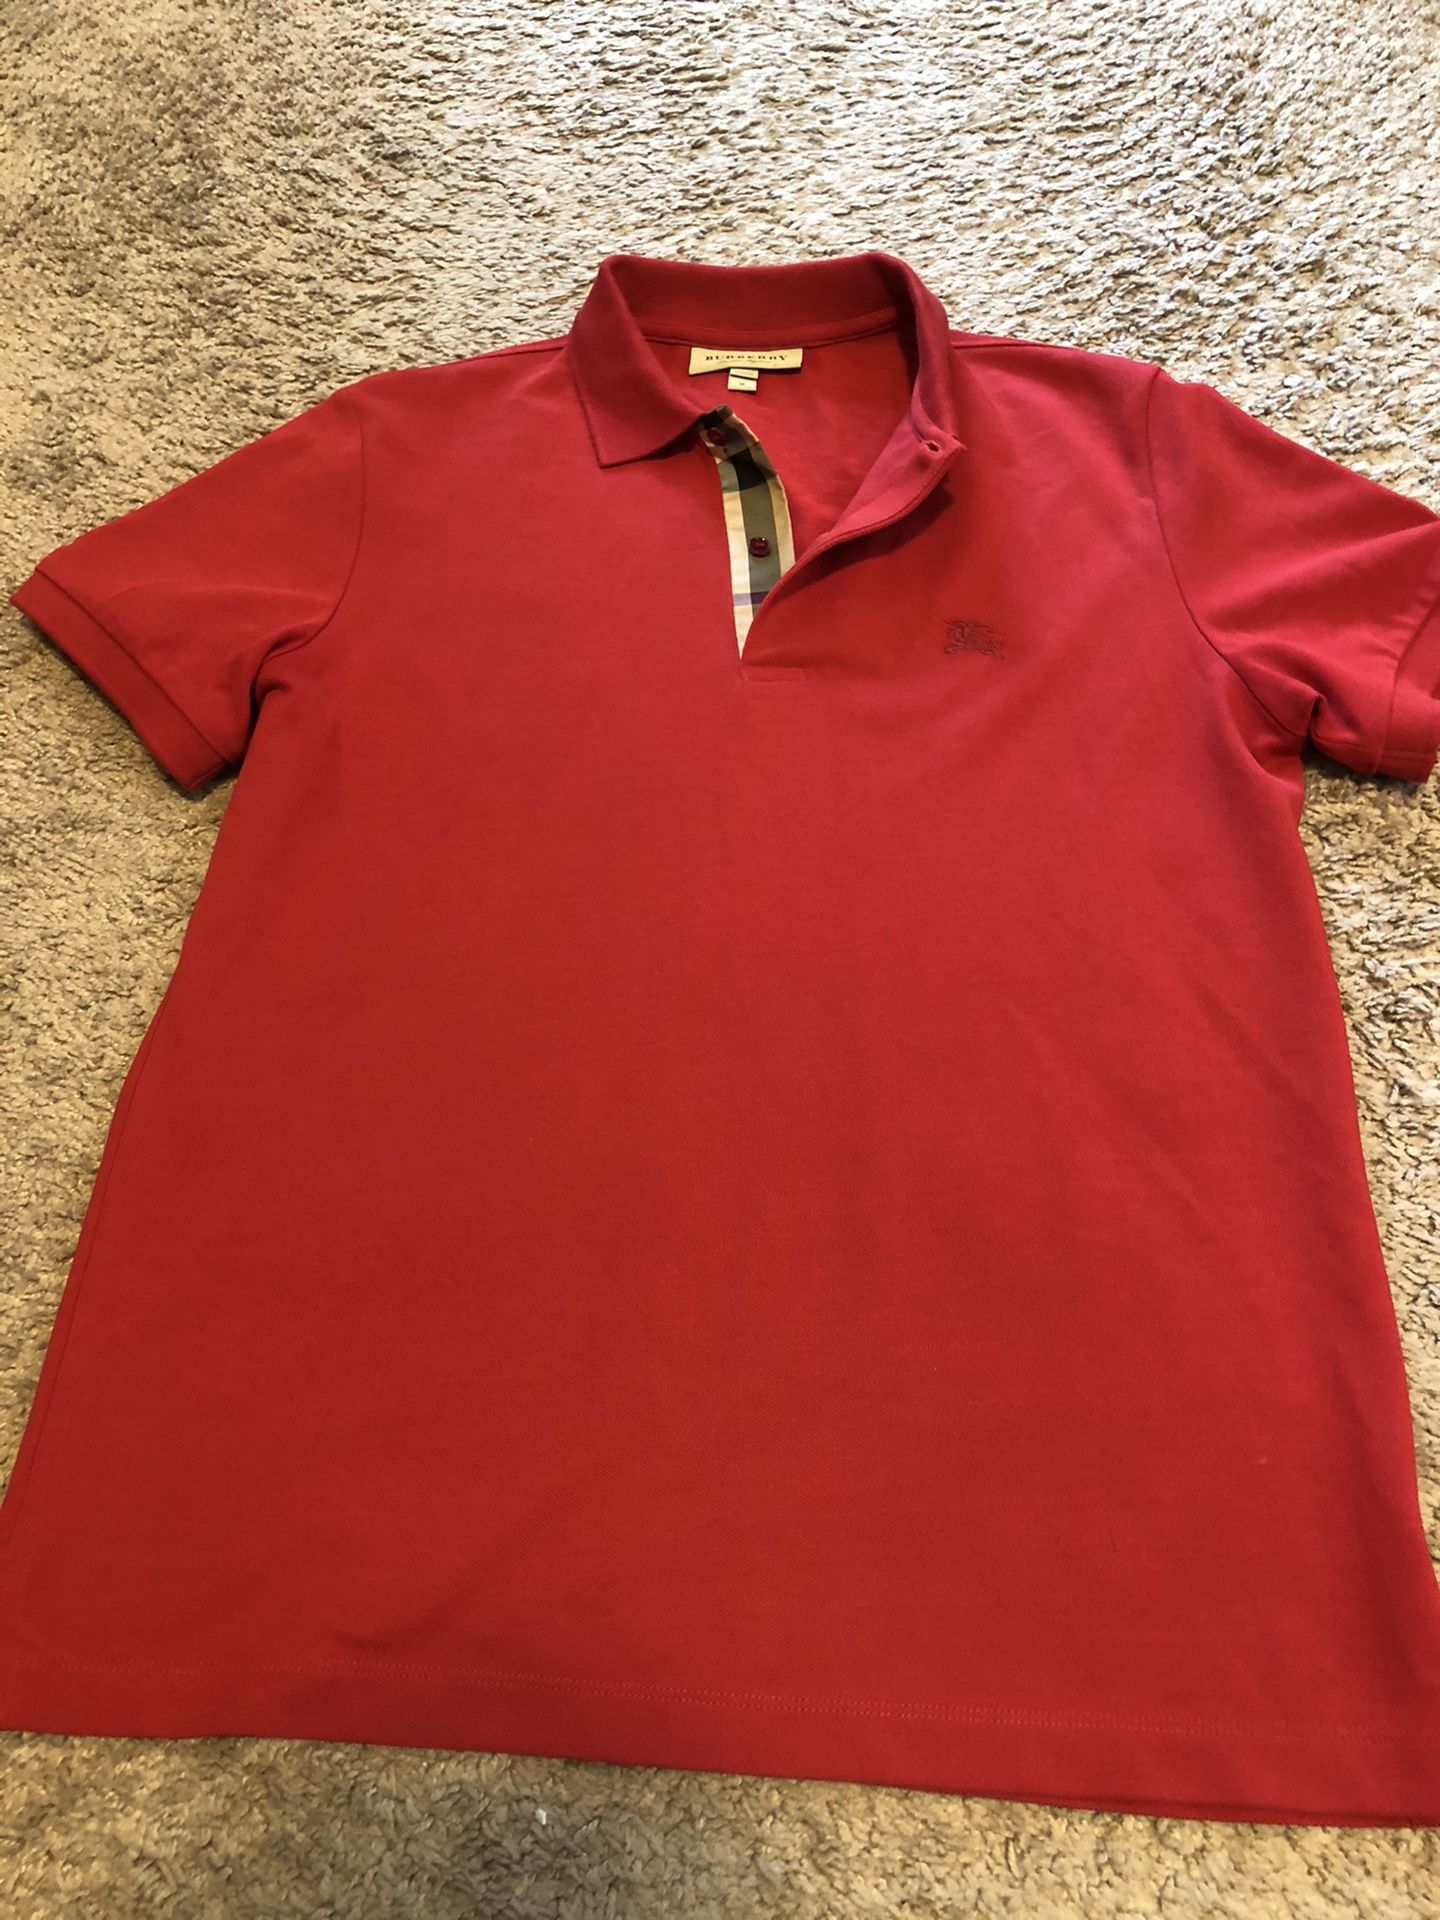 Men’s Red Burberry Shirt